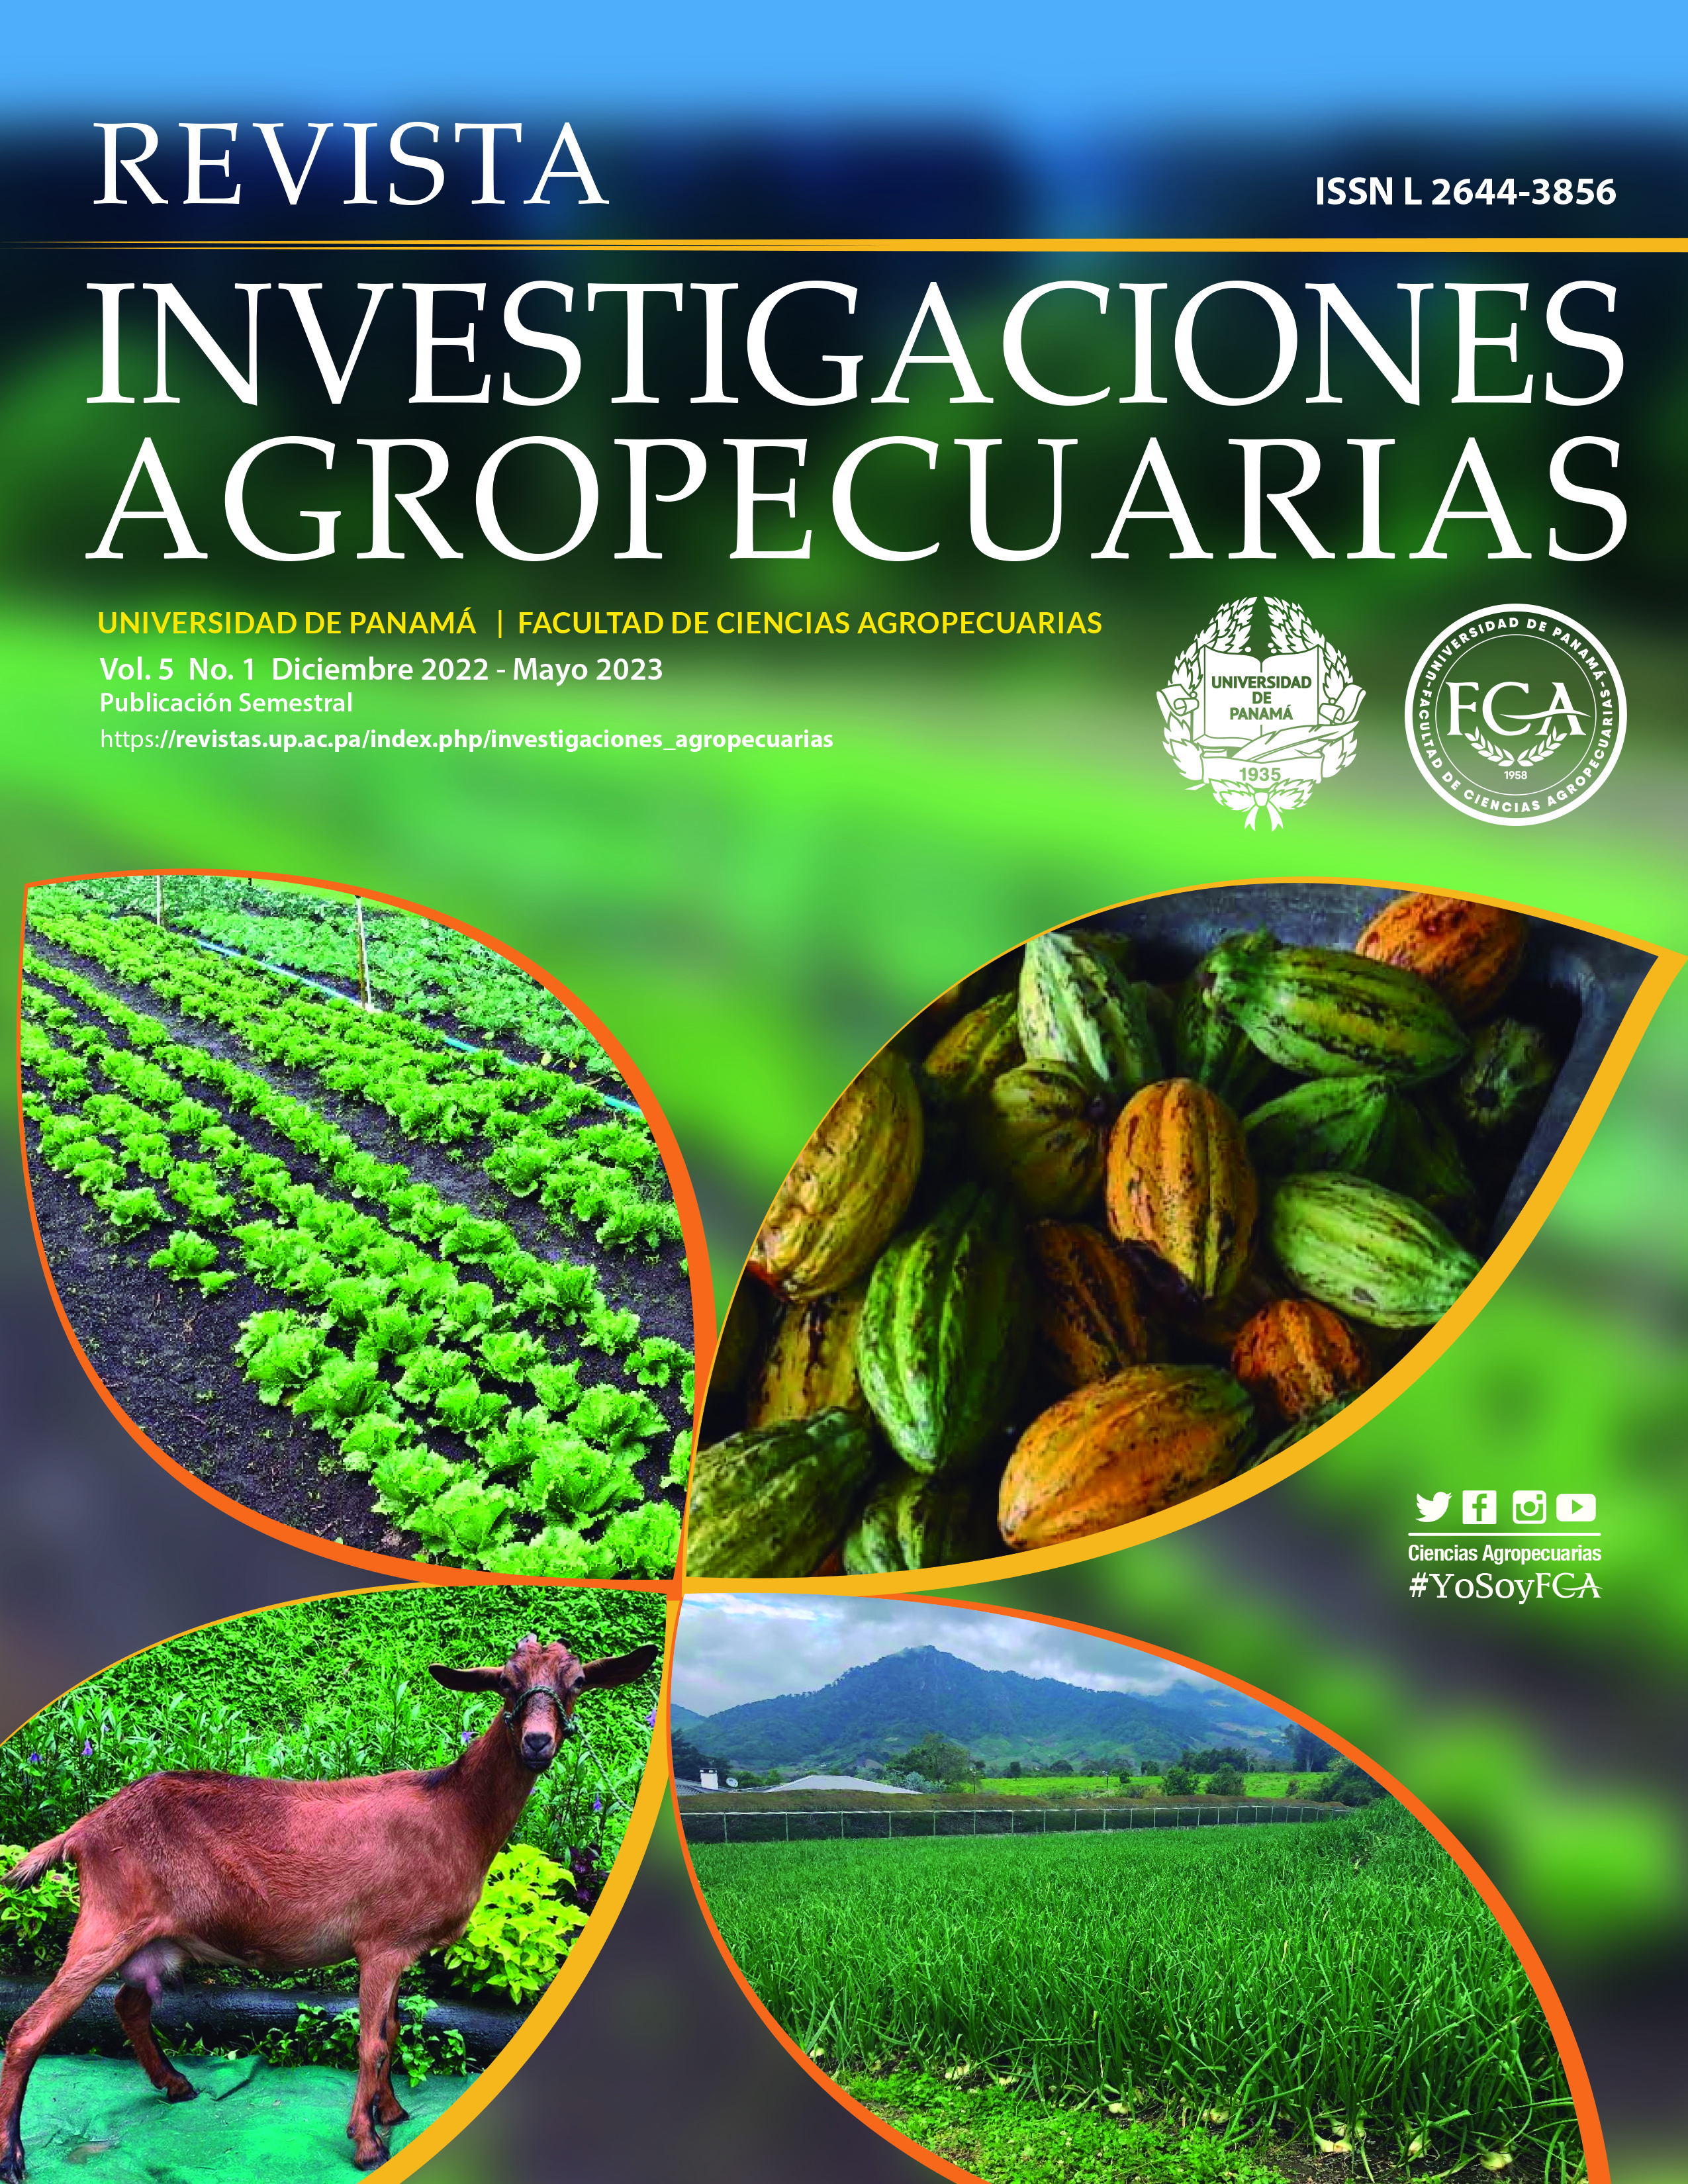 					Ver Vol. 5 Núm. 1: Revista Investigaciones Agropecuarias
				